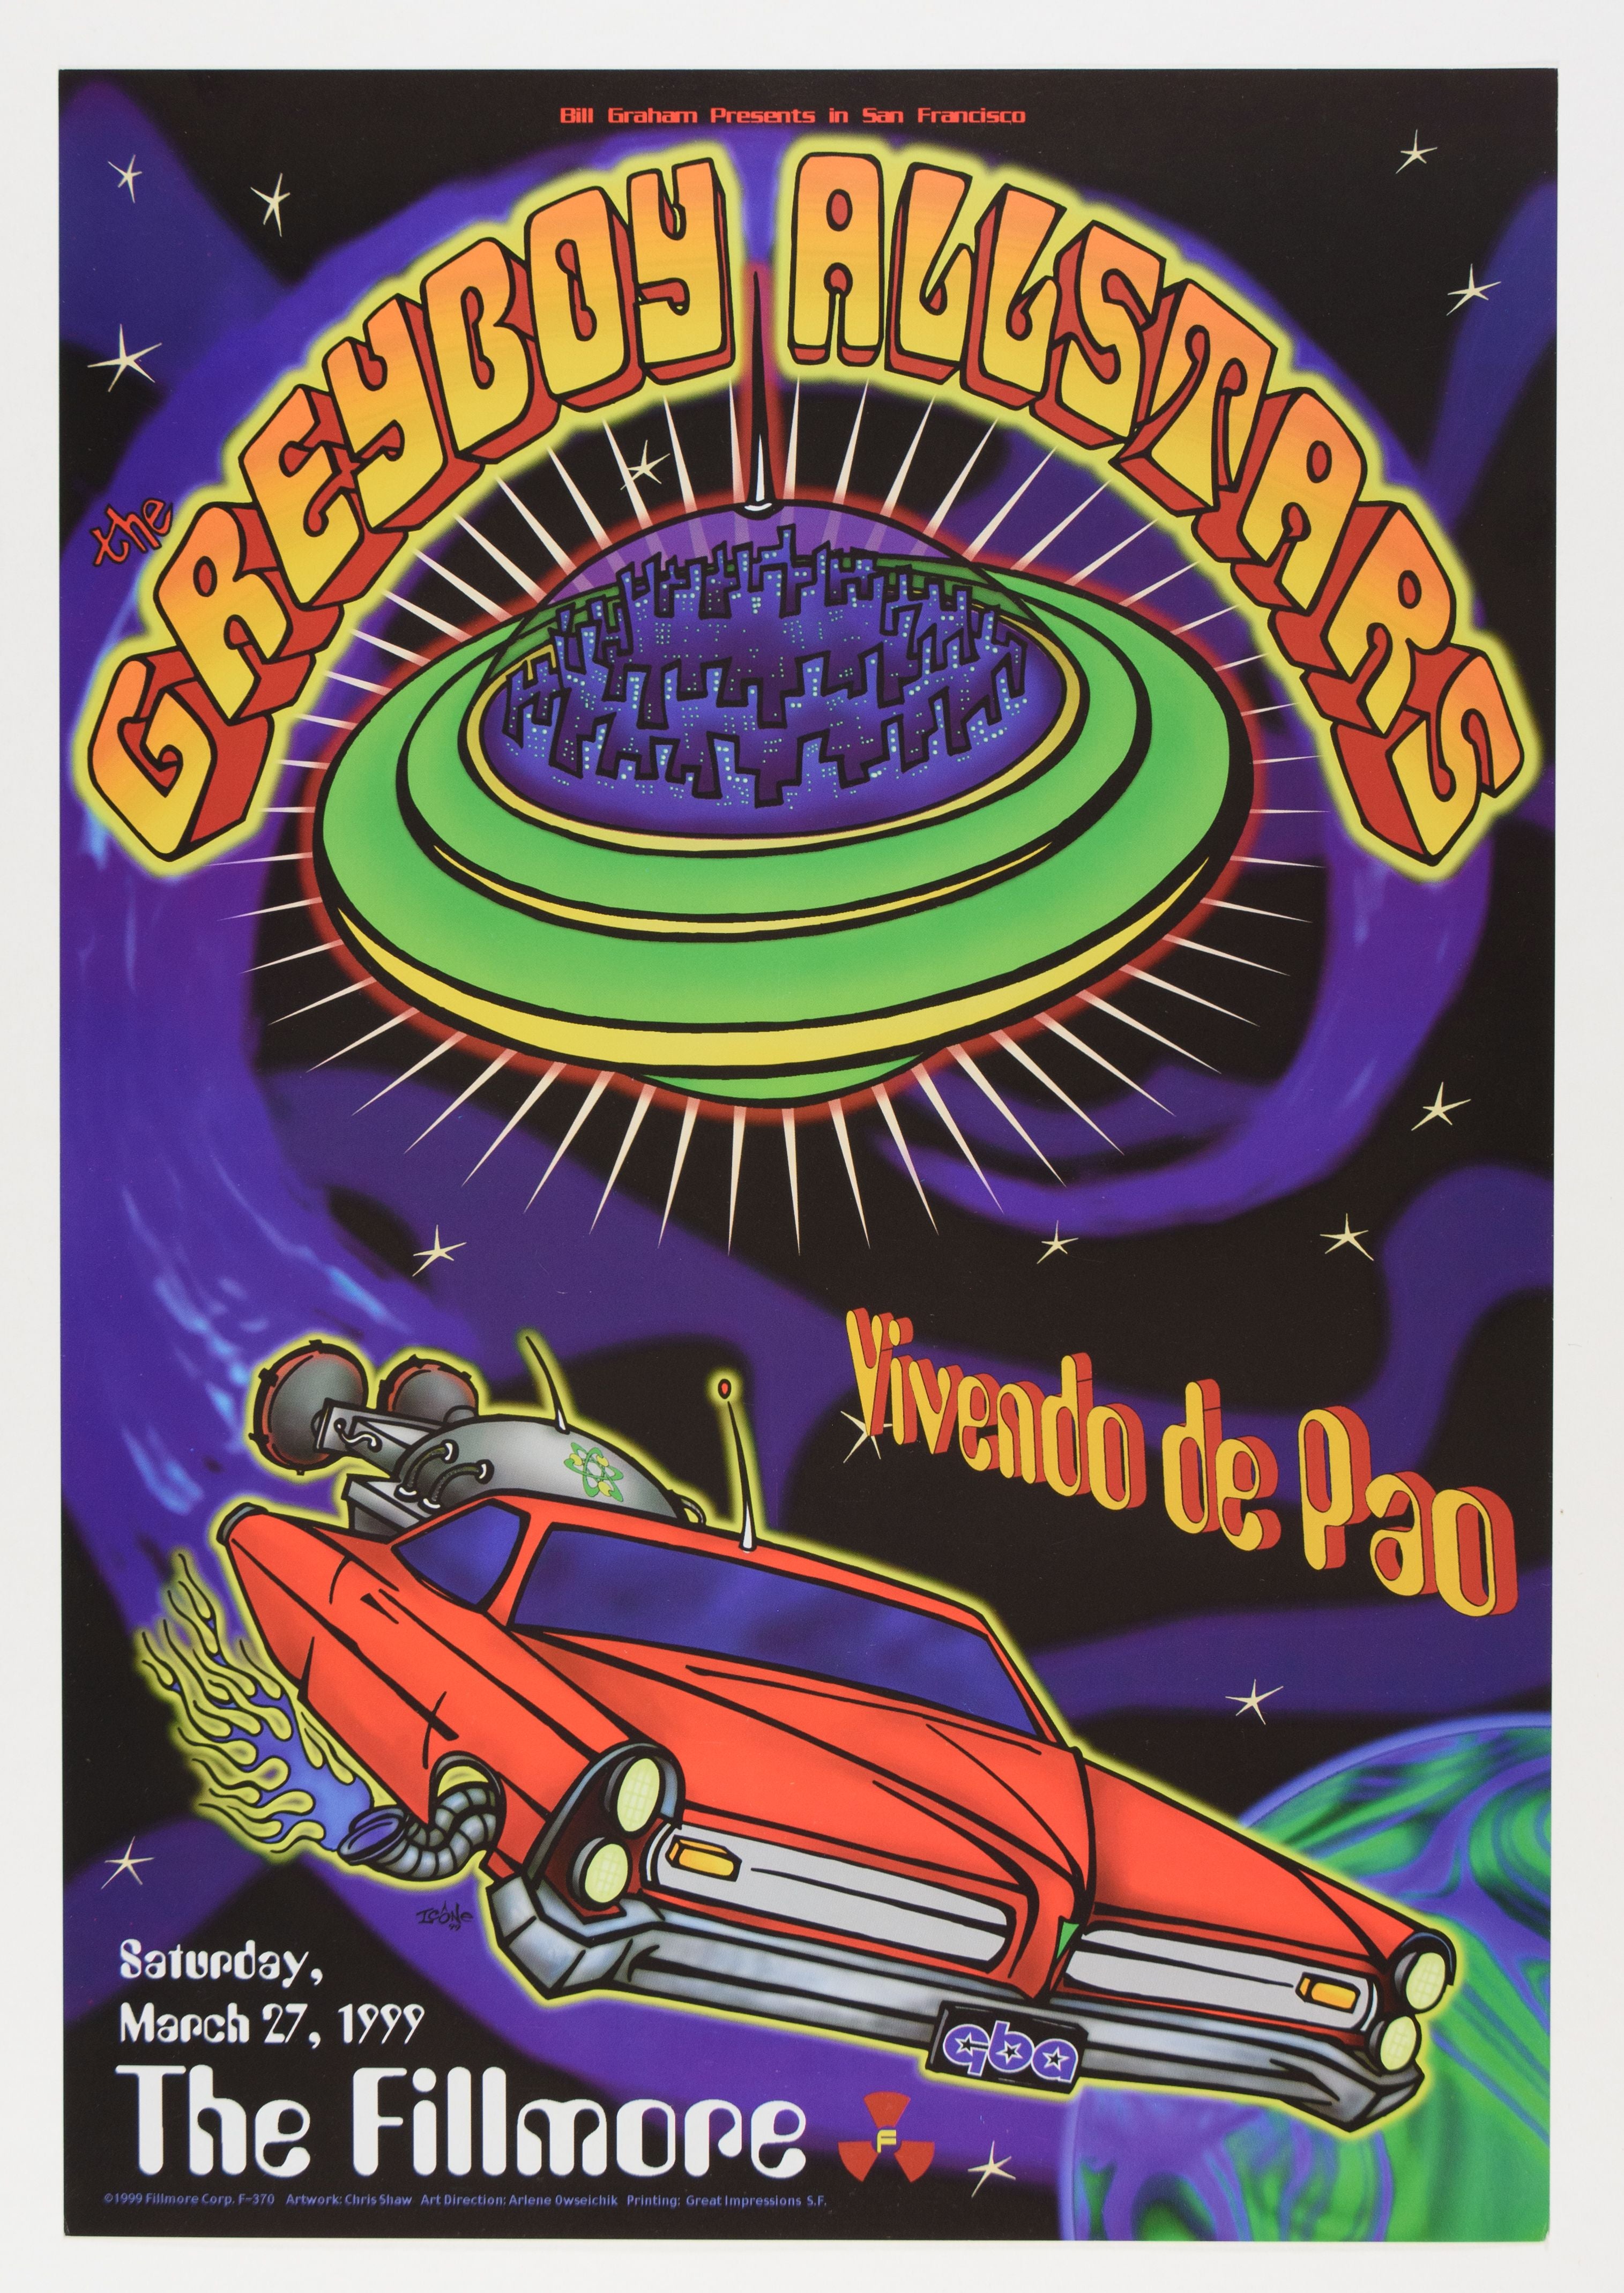 1999-Greyboy Allstars Concert Poster-The Fillmore-San Francisco, CA